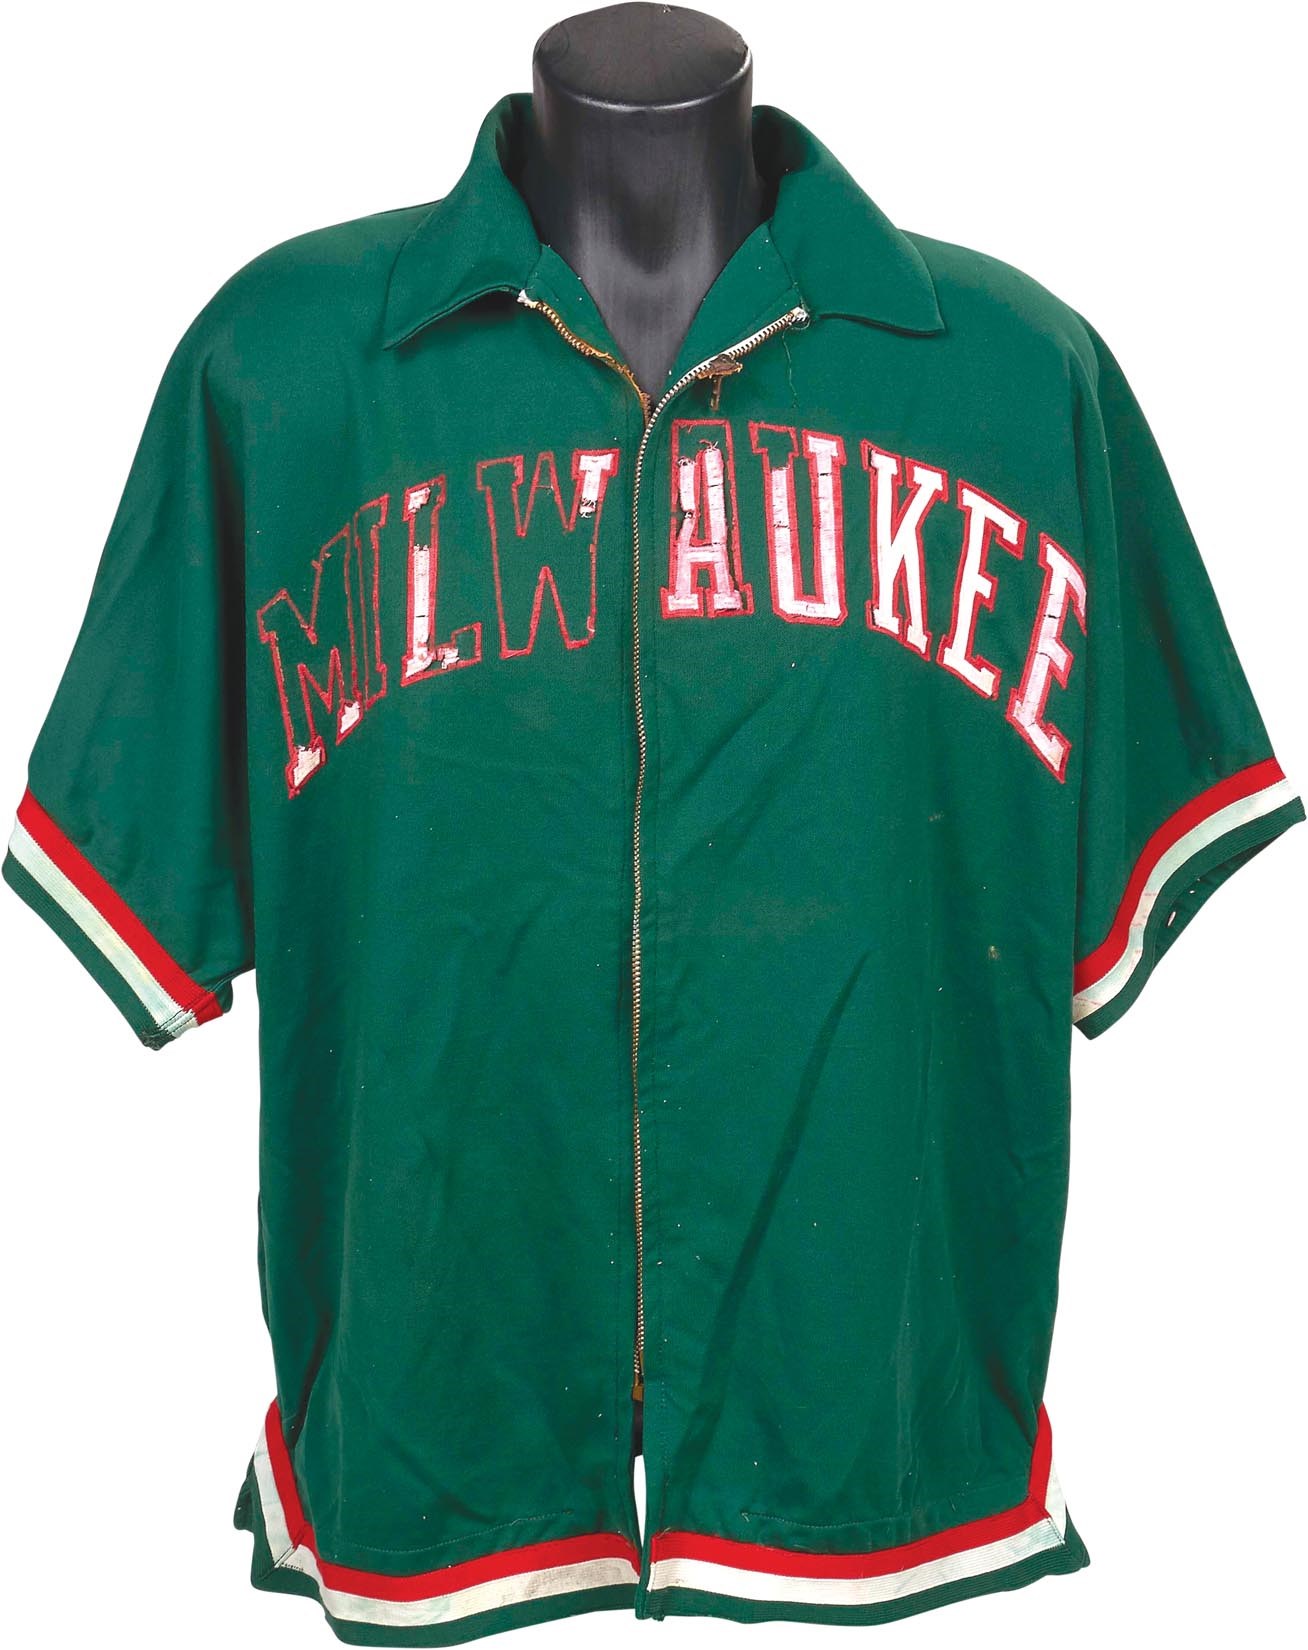 The Oscar Robertson Collection - Early 1970s Oscar Robertson Milwaukee Bucks Warm-Up Suit